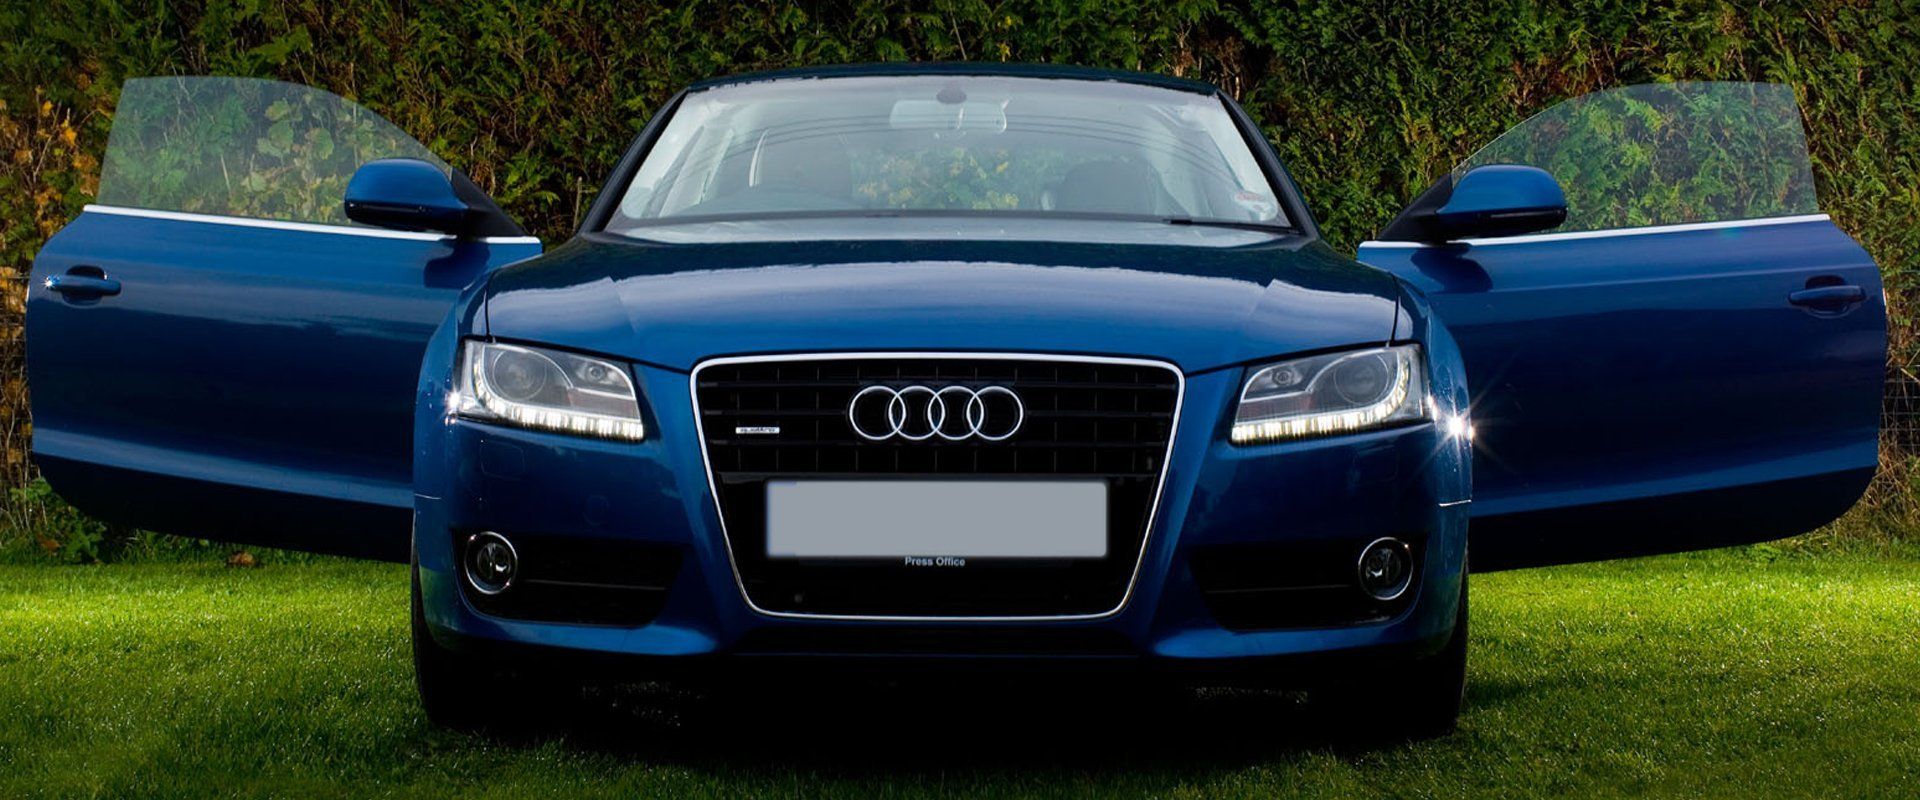 A blue Audi car